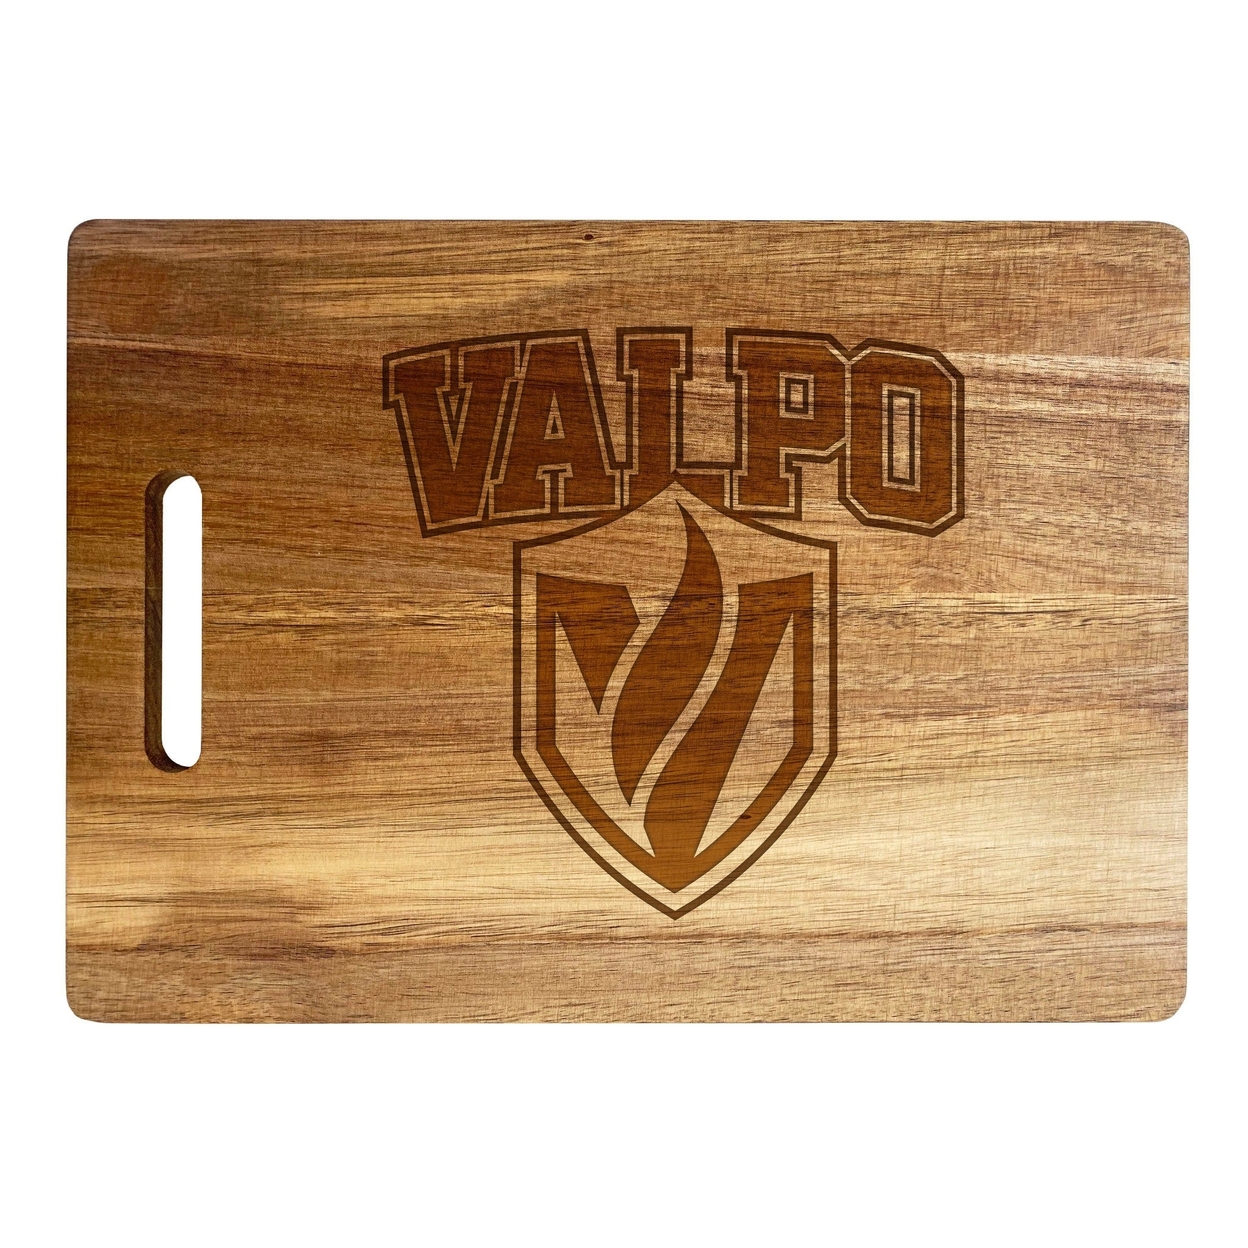 Valparaiso University Engraved Wooden Cutting Board 10 X 14 Acacia Wood - Large Engraving